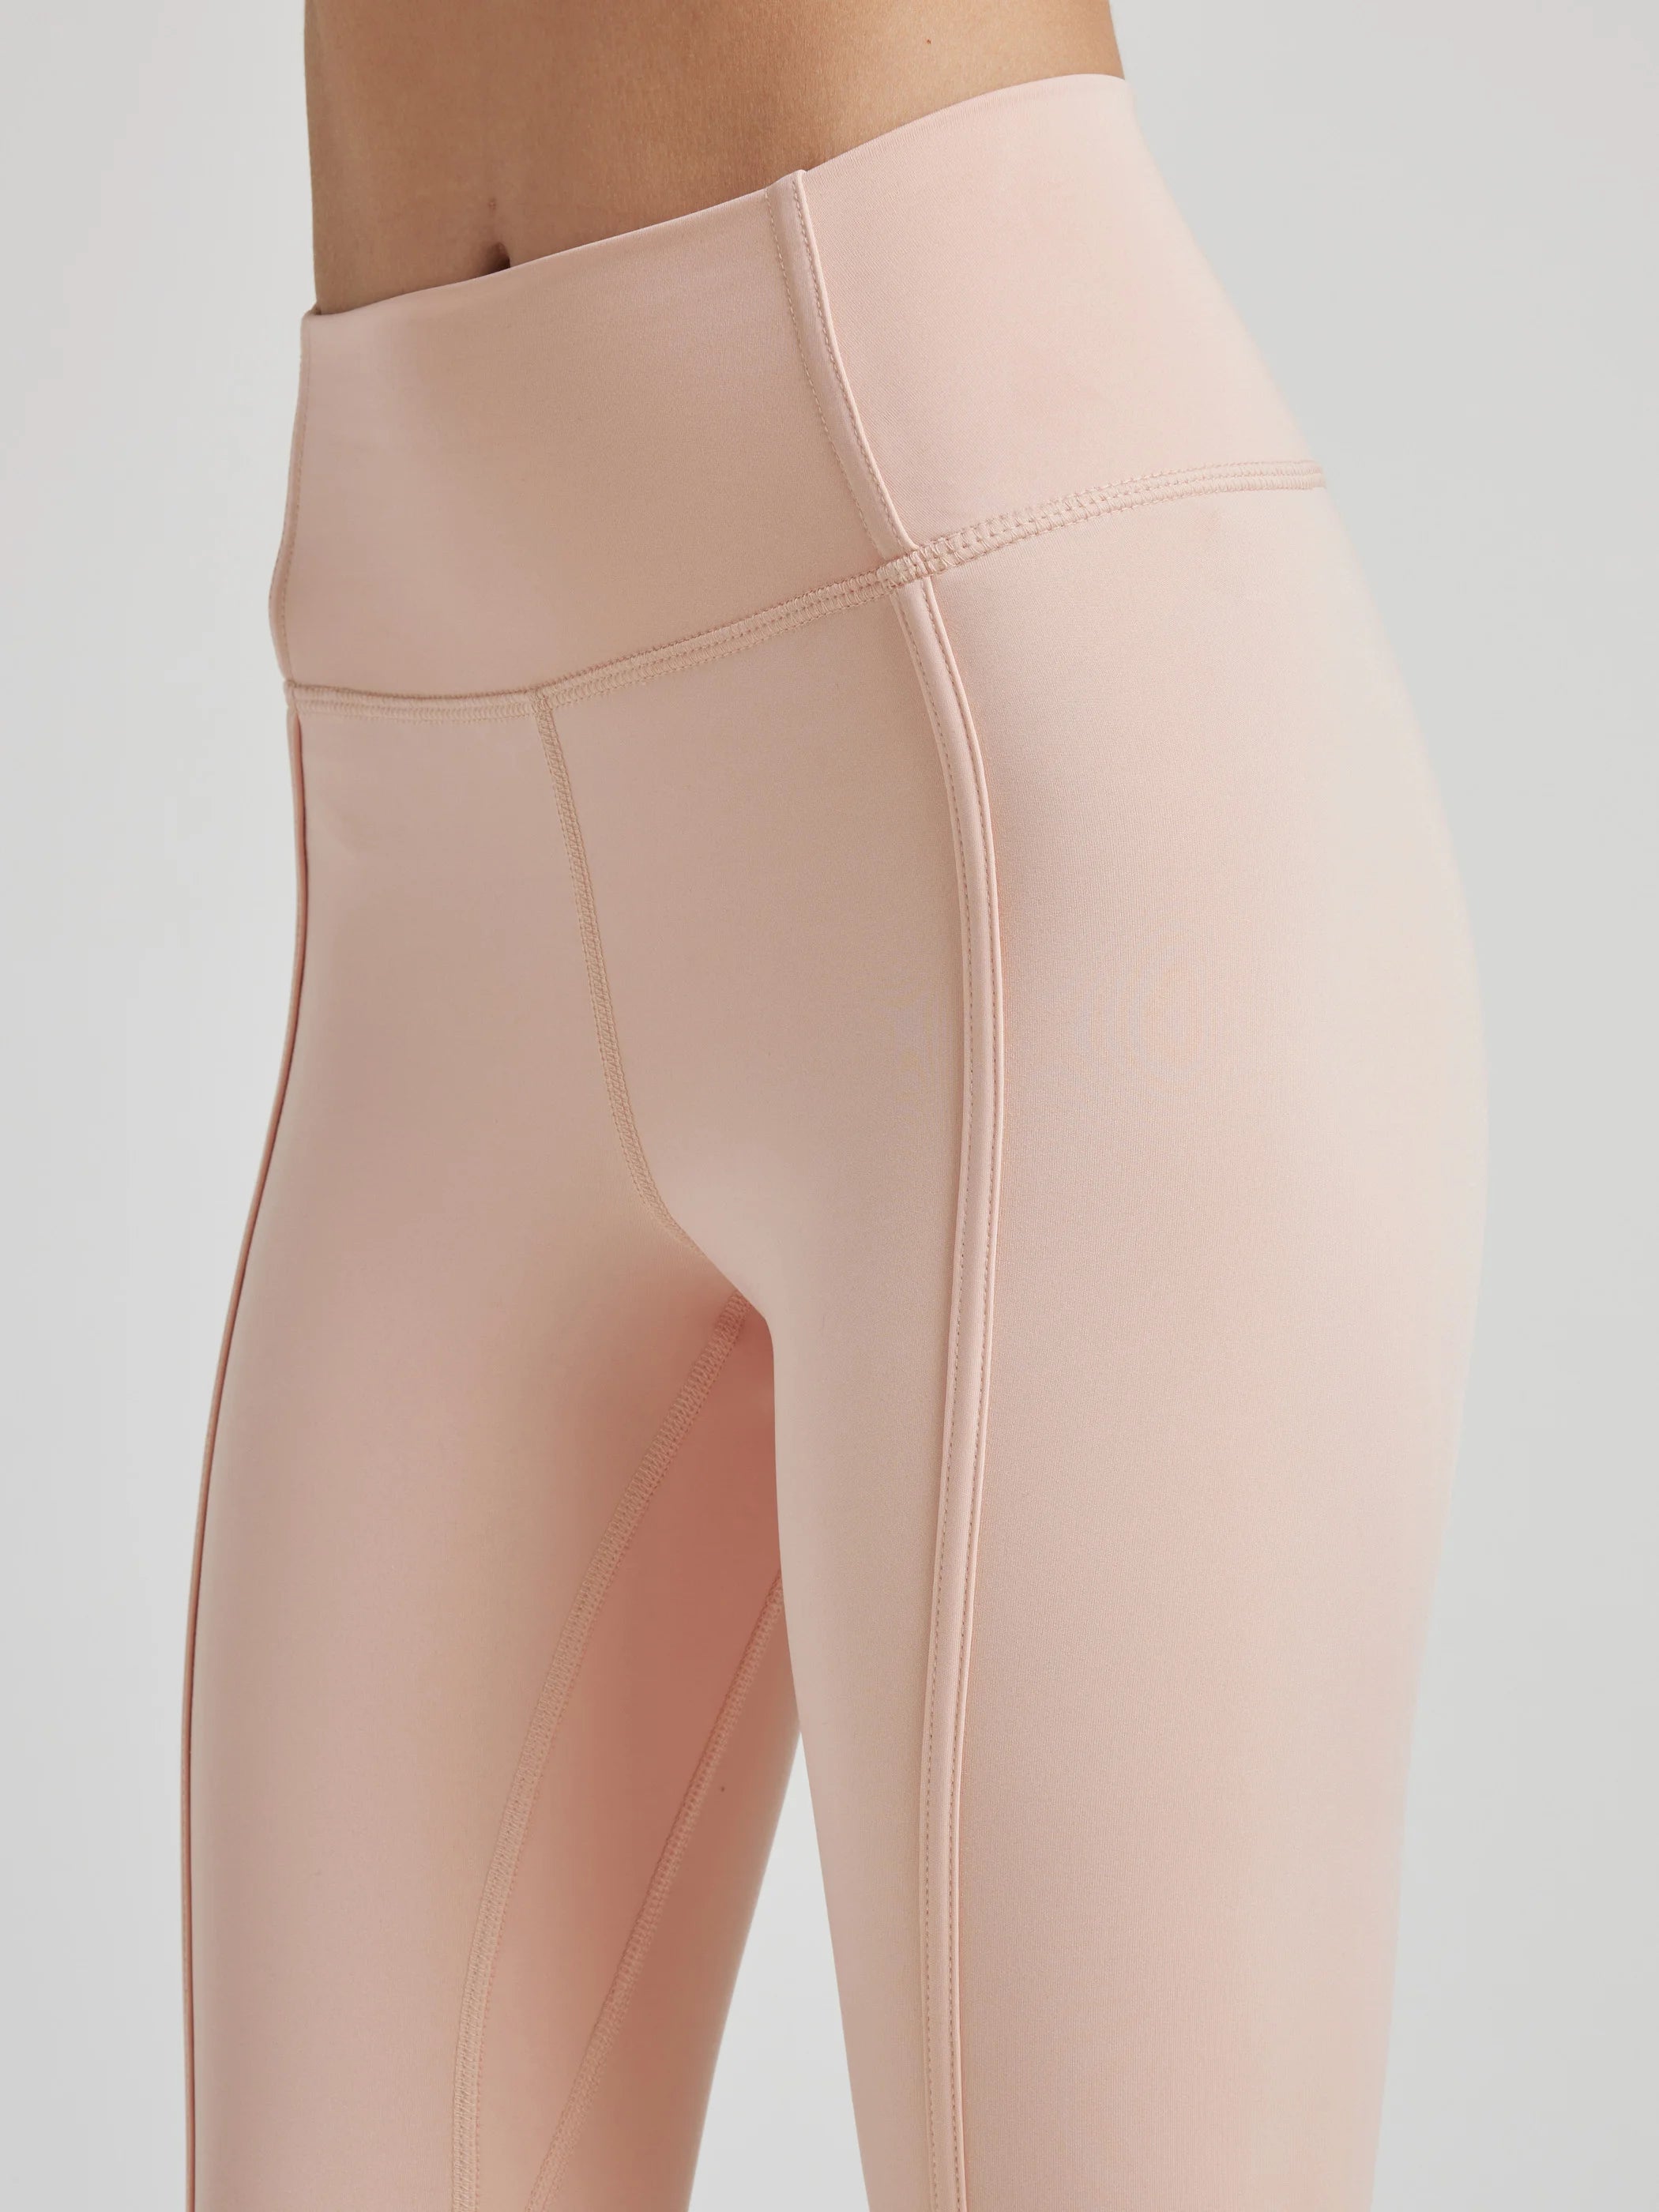 model poses in ballet-pink leggings with corset boning